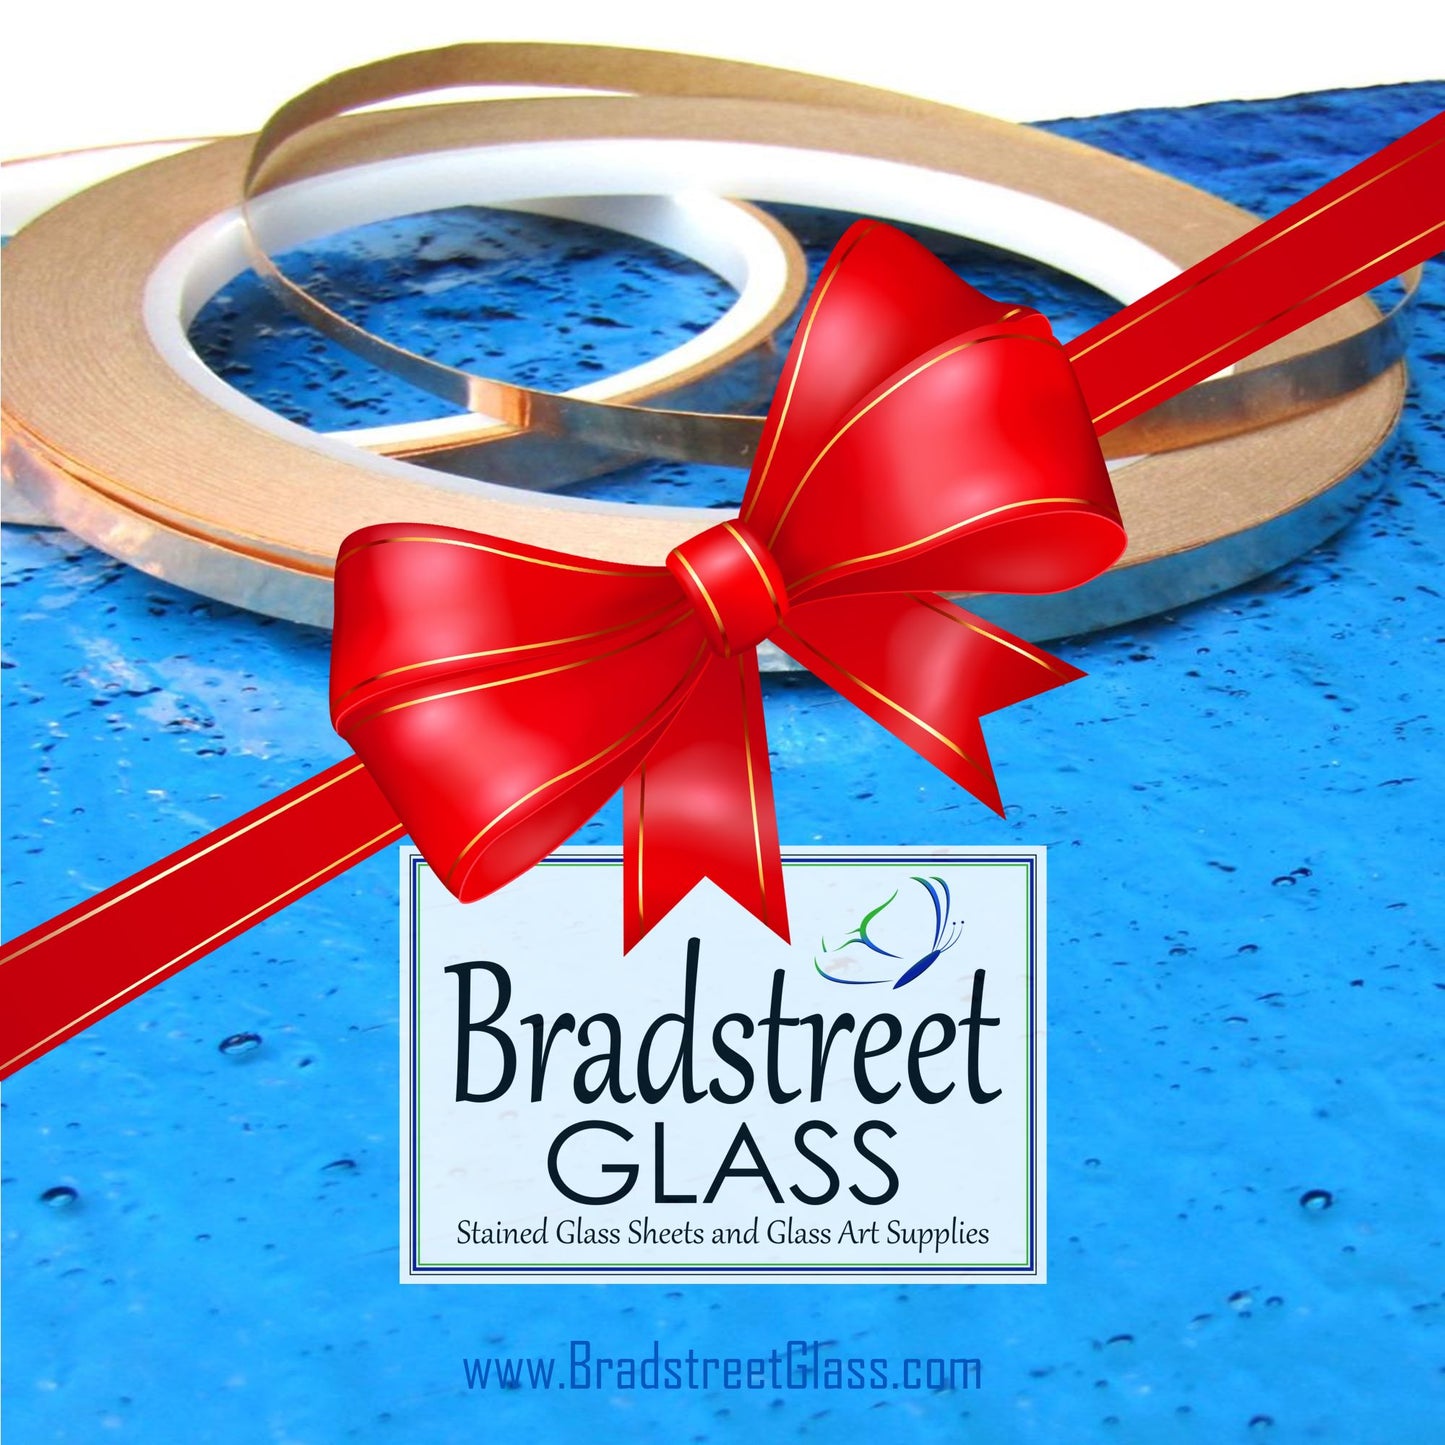 Bradstreet Glass Gift Card: $25, $50, $100, or $250